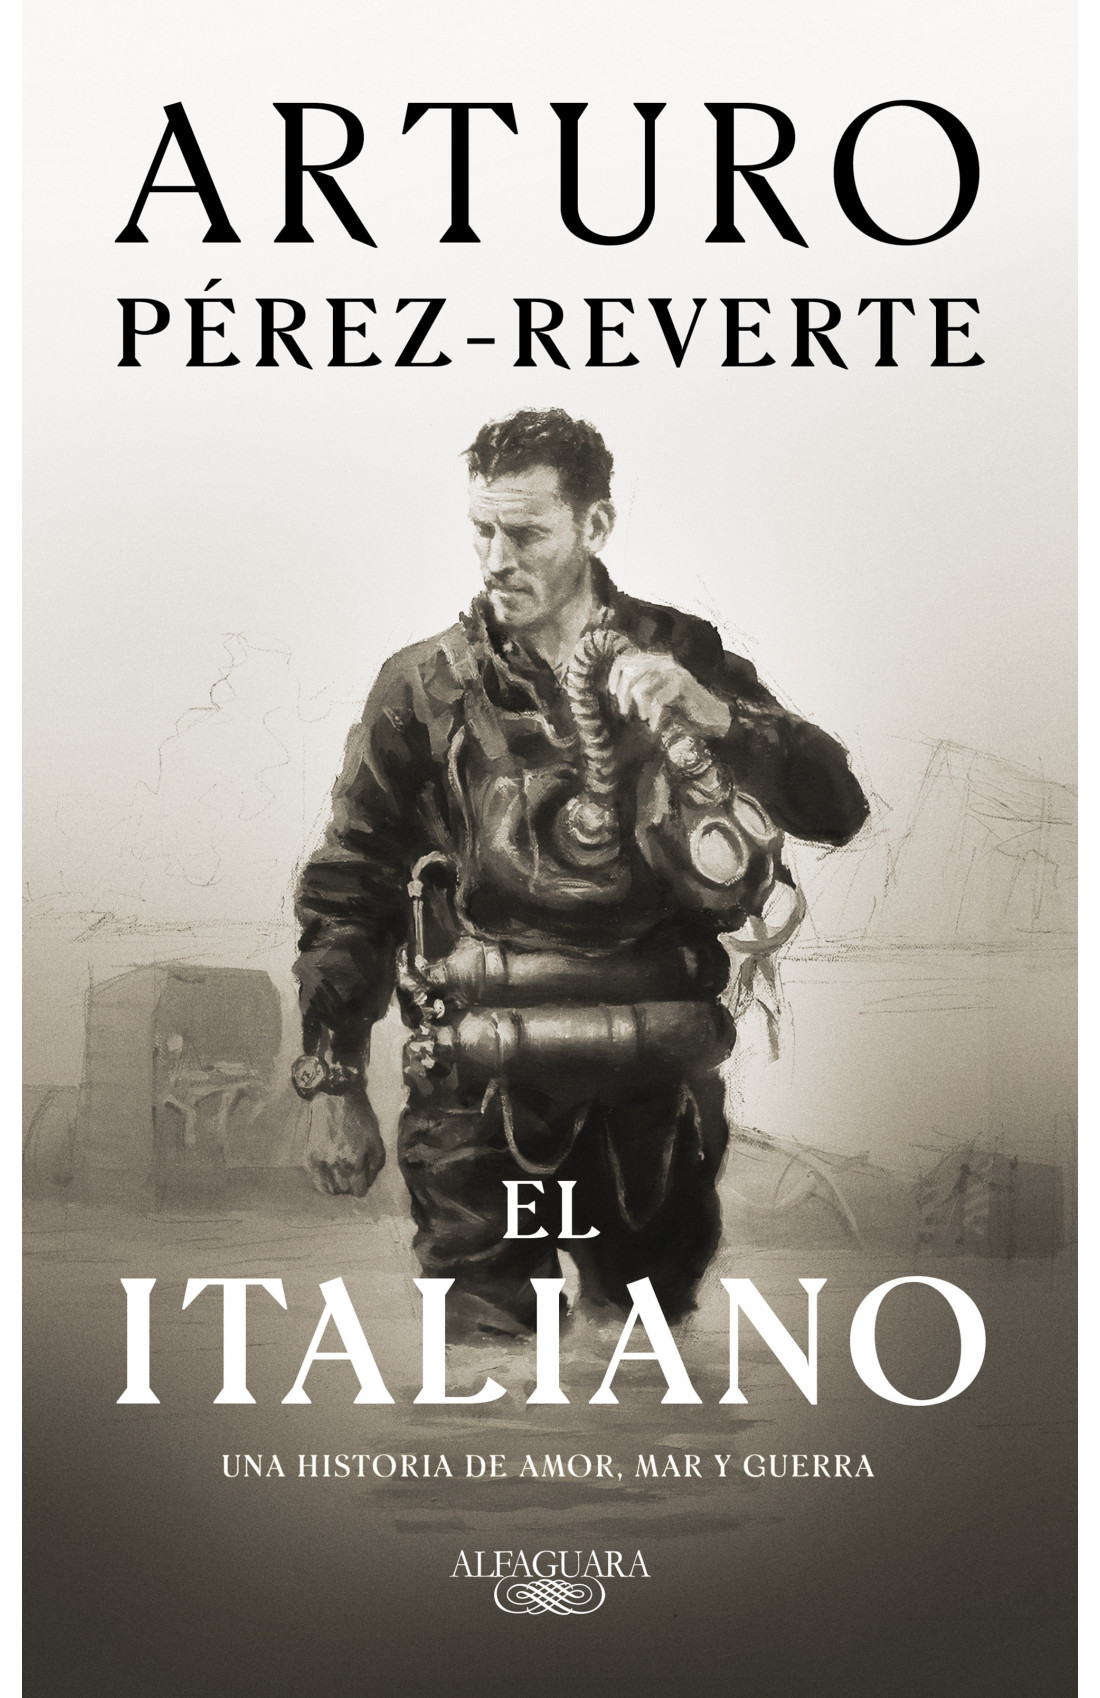 Los hombres torpedo que inspiraron a Pérez-Reverte 3